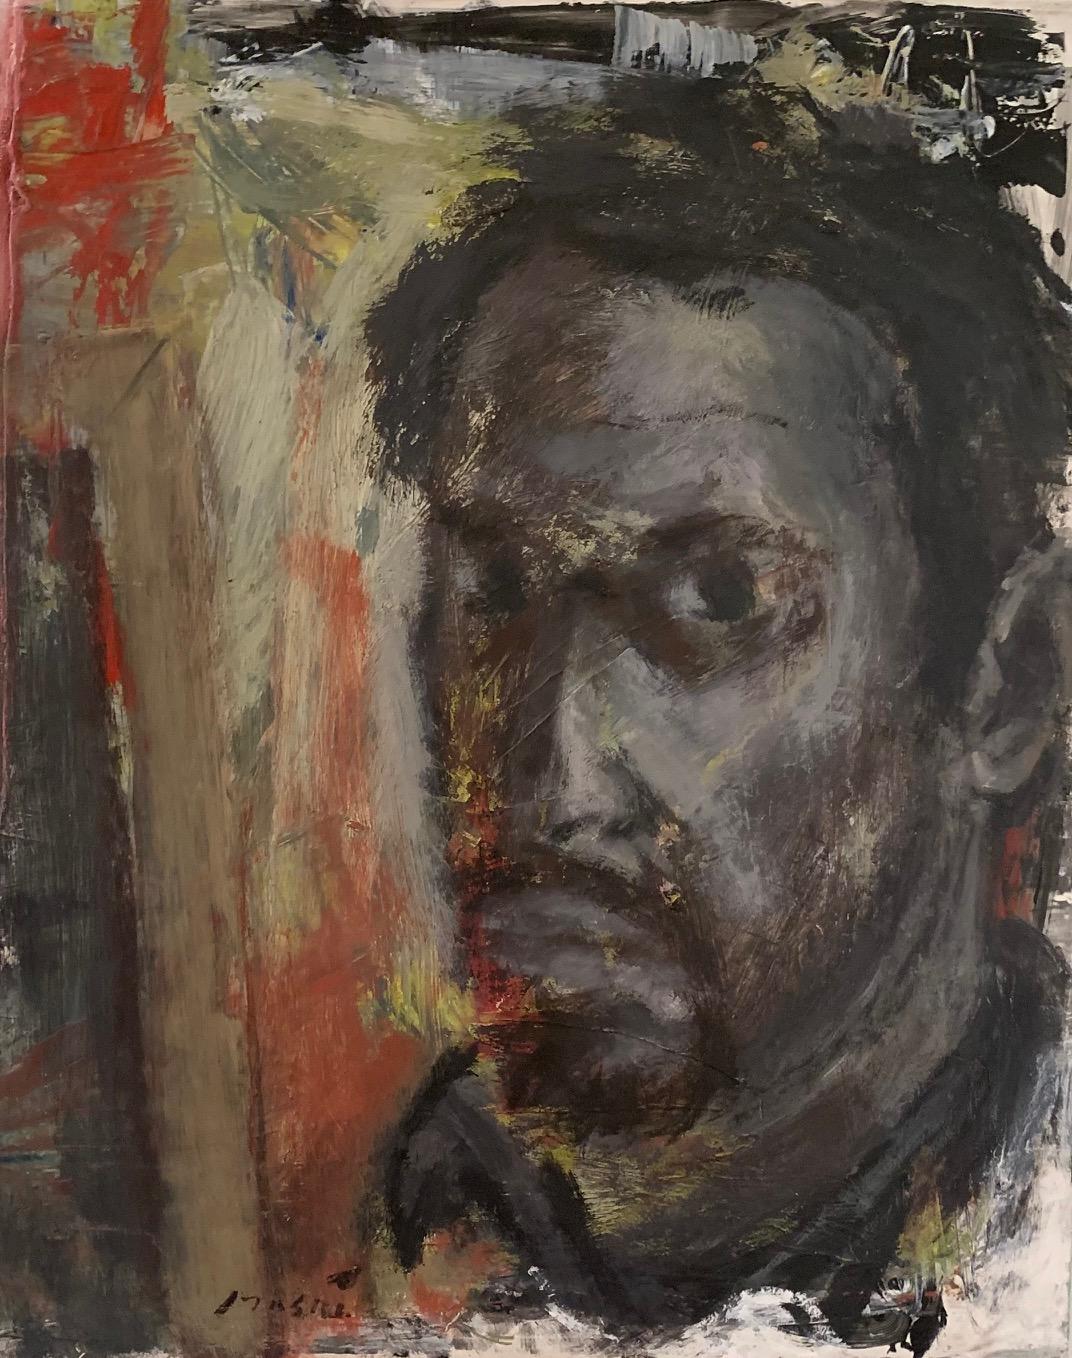 Masri Hayssam Figurative Painting - "Self Portrait In Dark" Oil on canvas 20"x16" by Masri